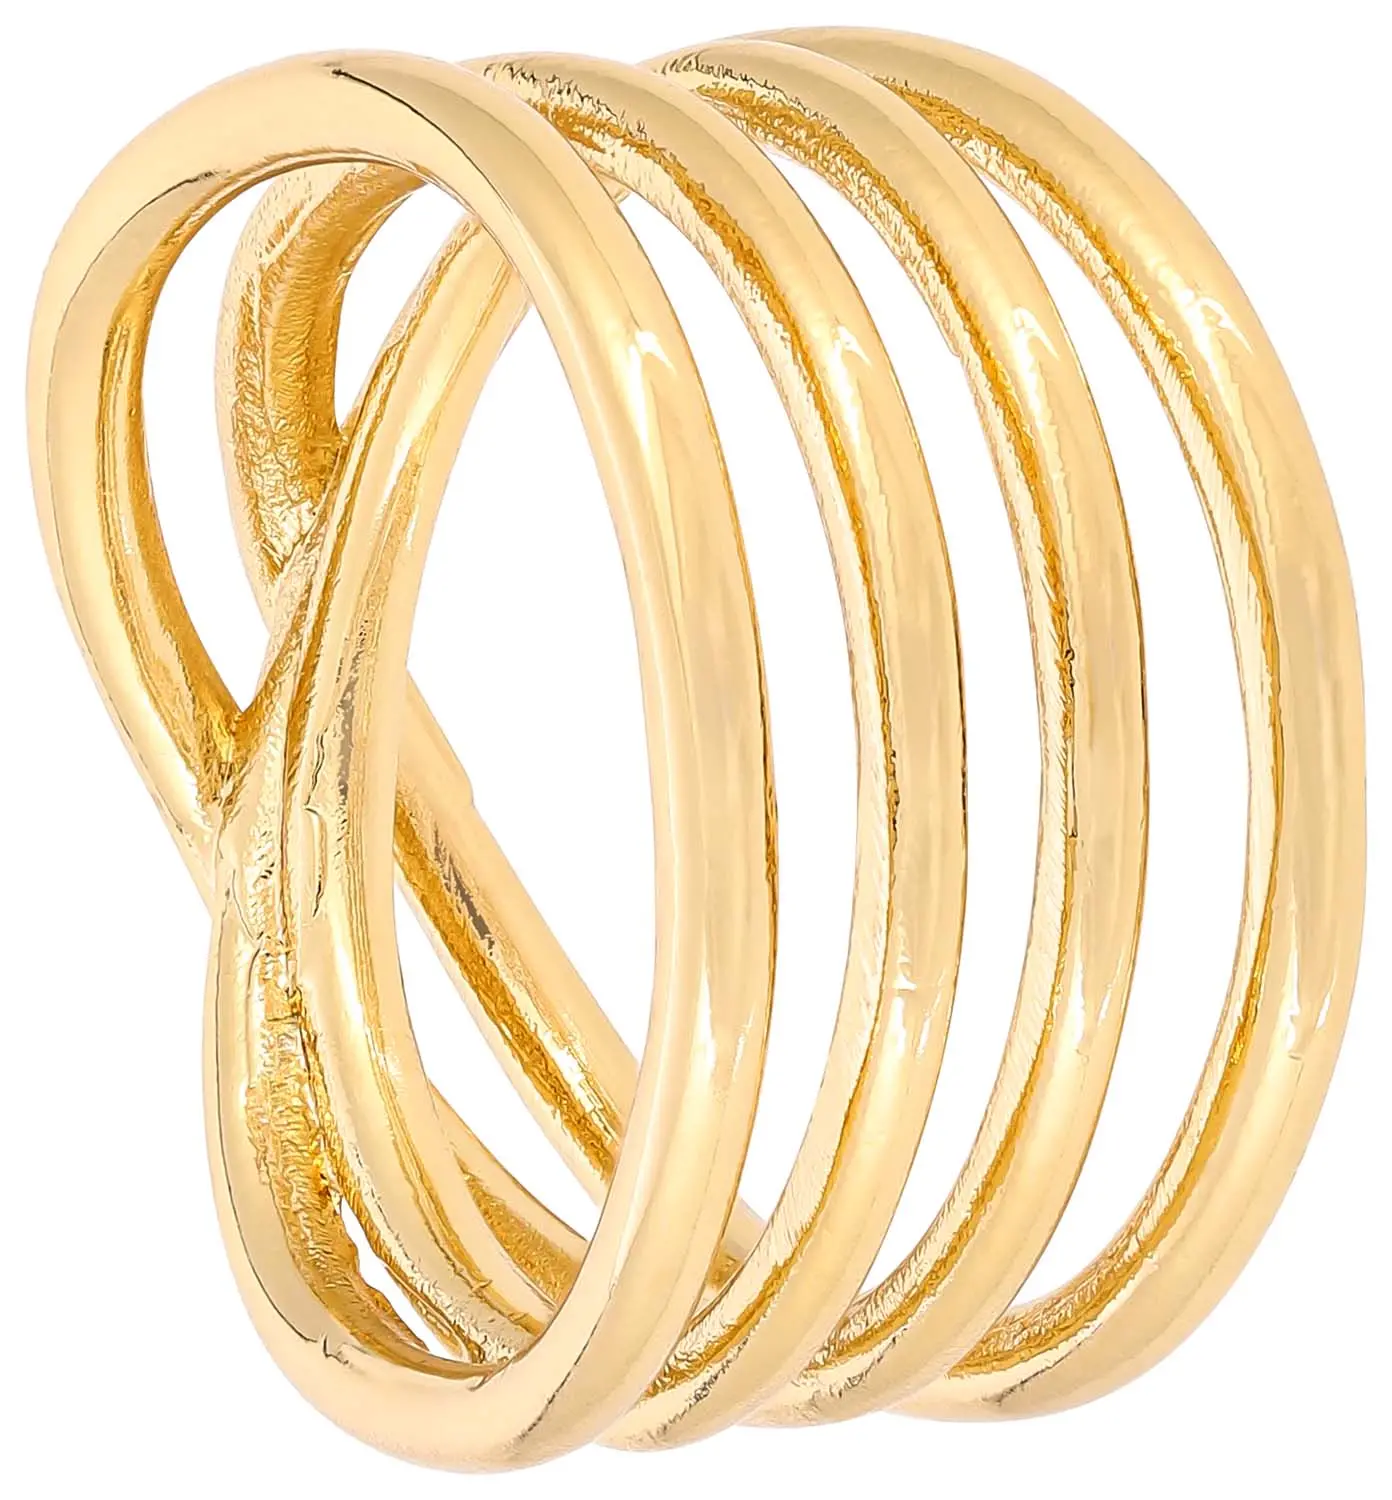 Ring - Constructal Golden